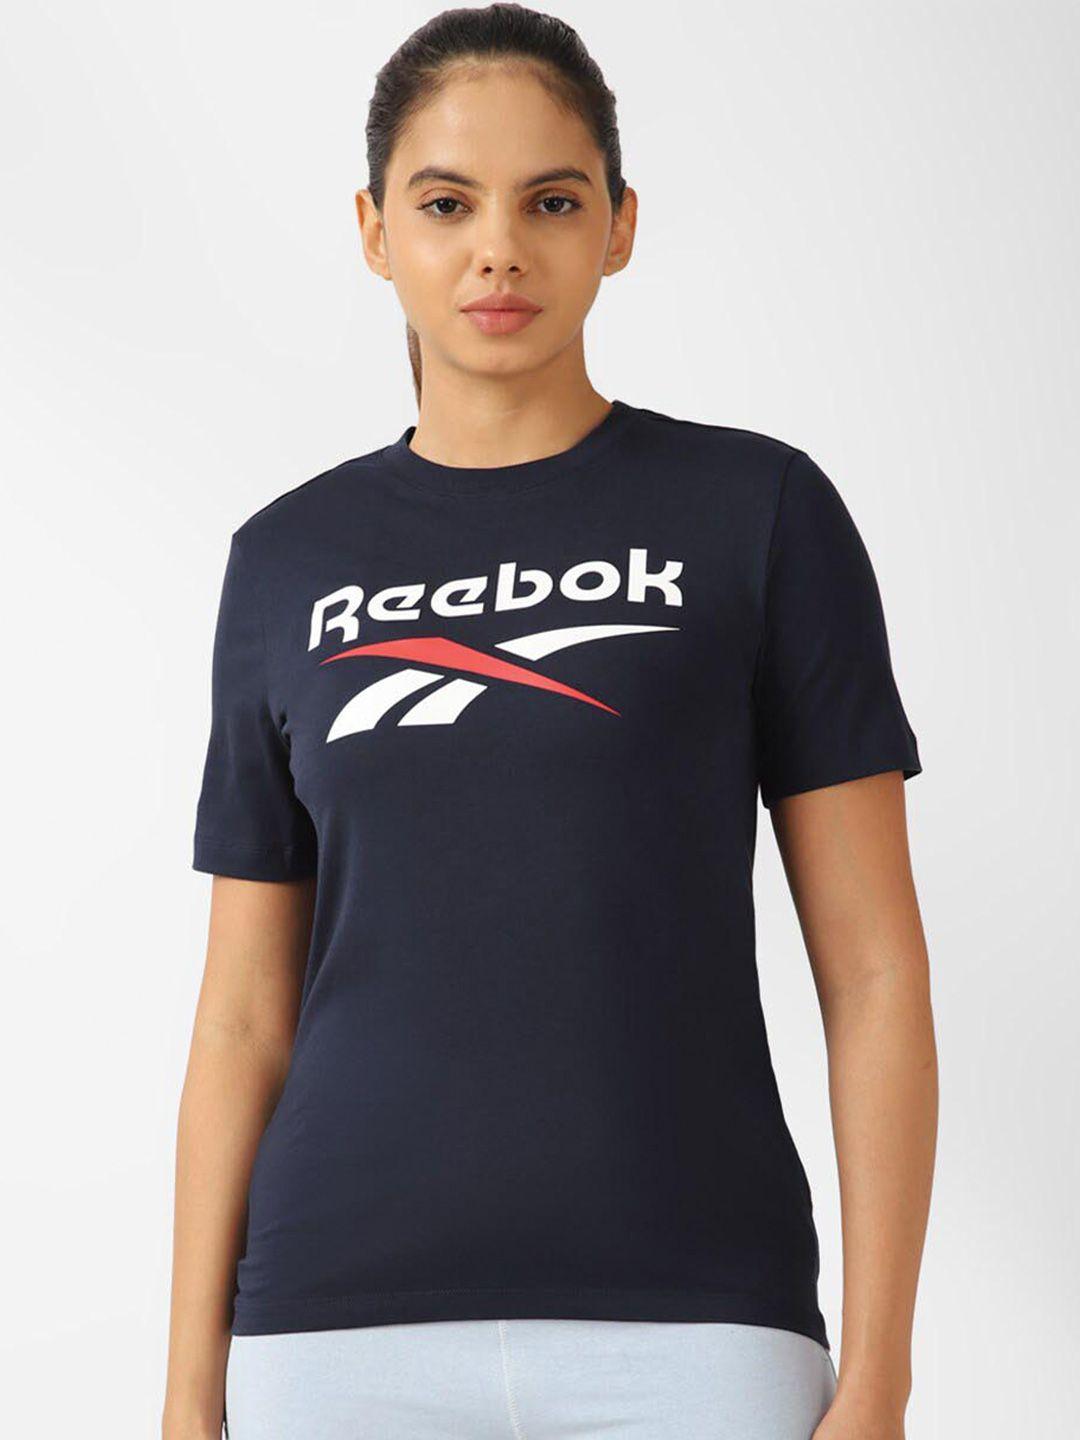 reebok-ri-bi-logo-printed-round-neck-slim-fit-pure-cotton-t-shirt